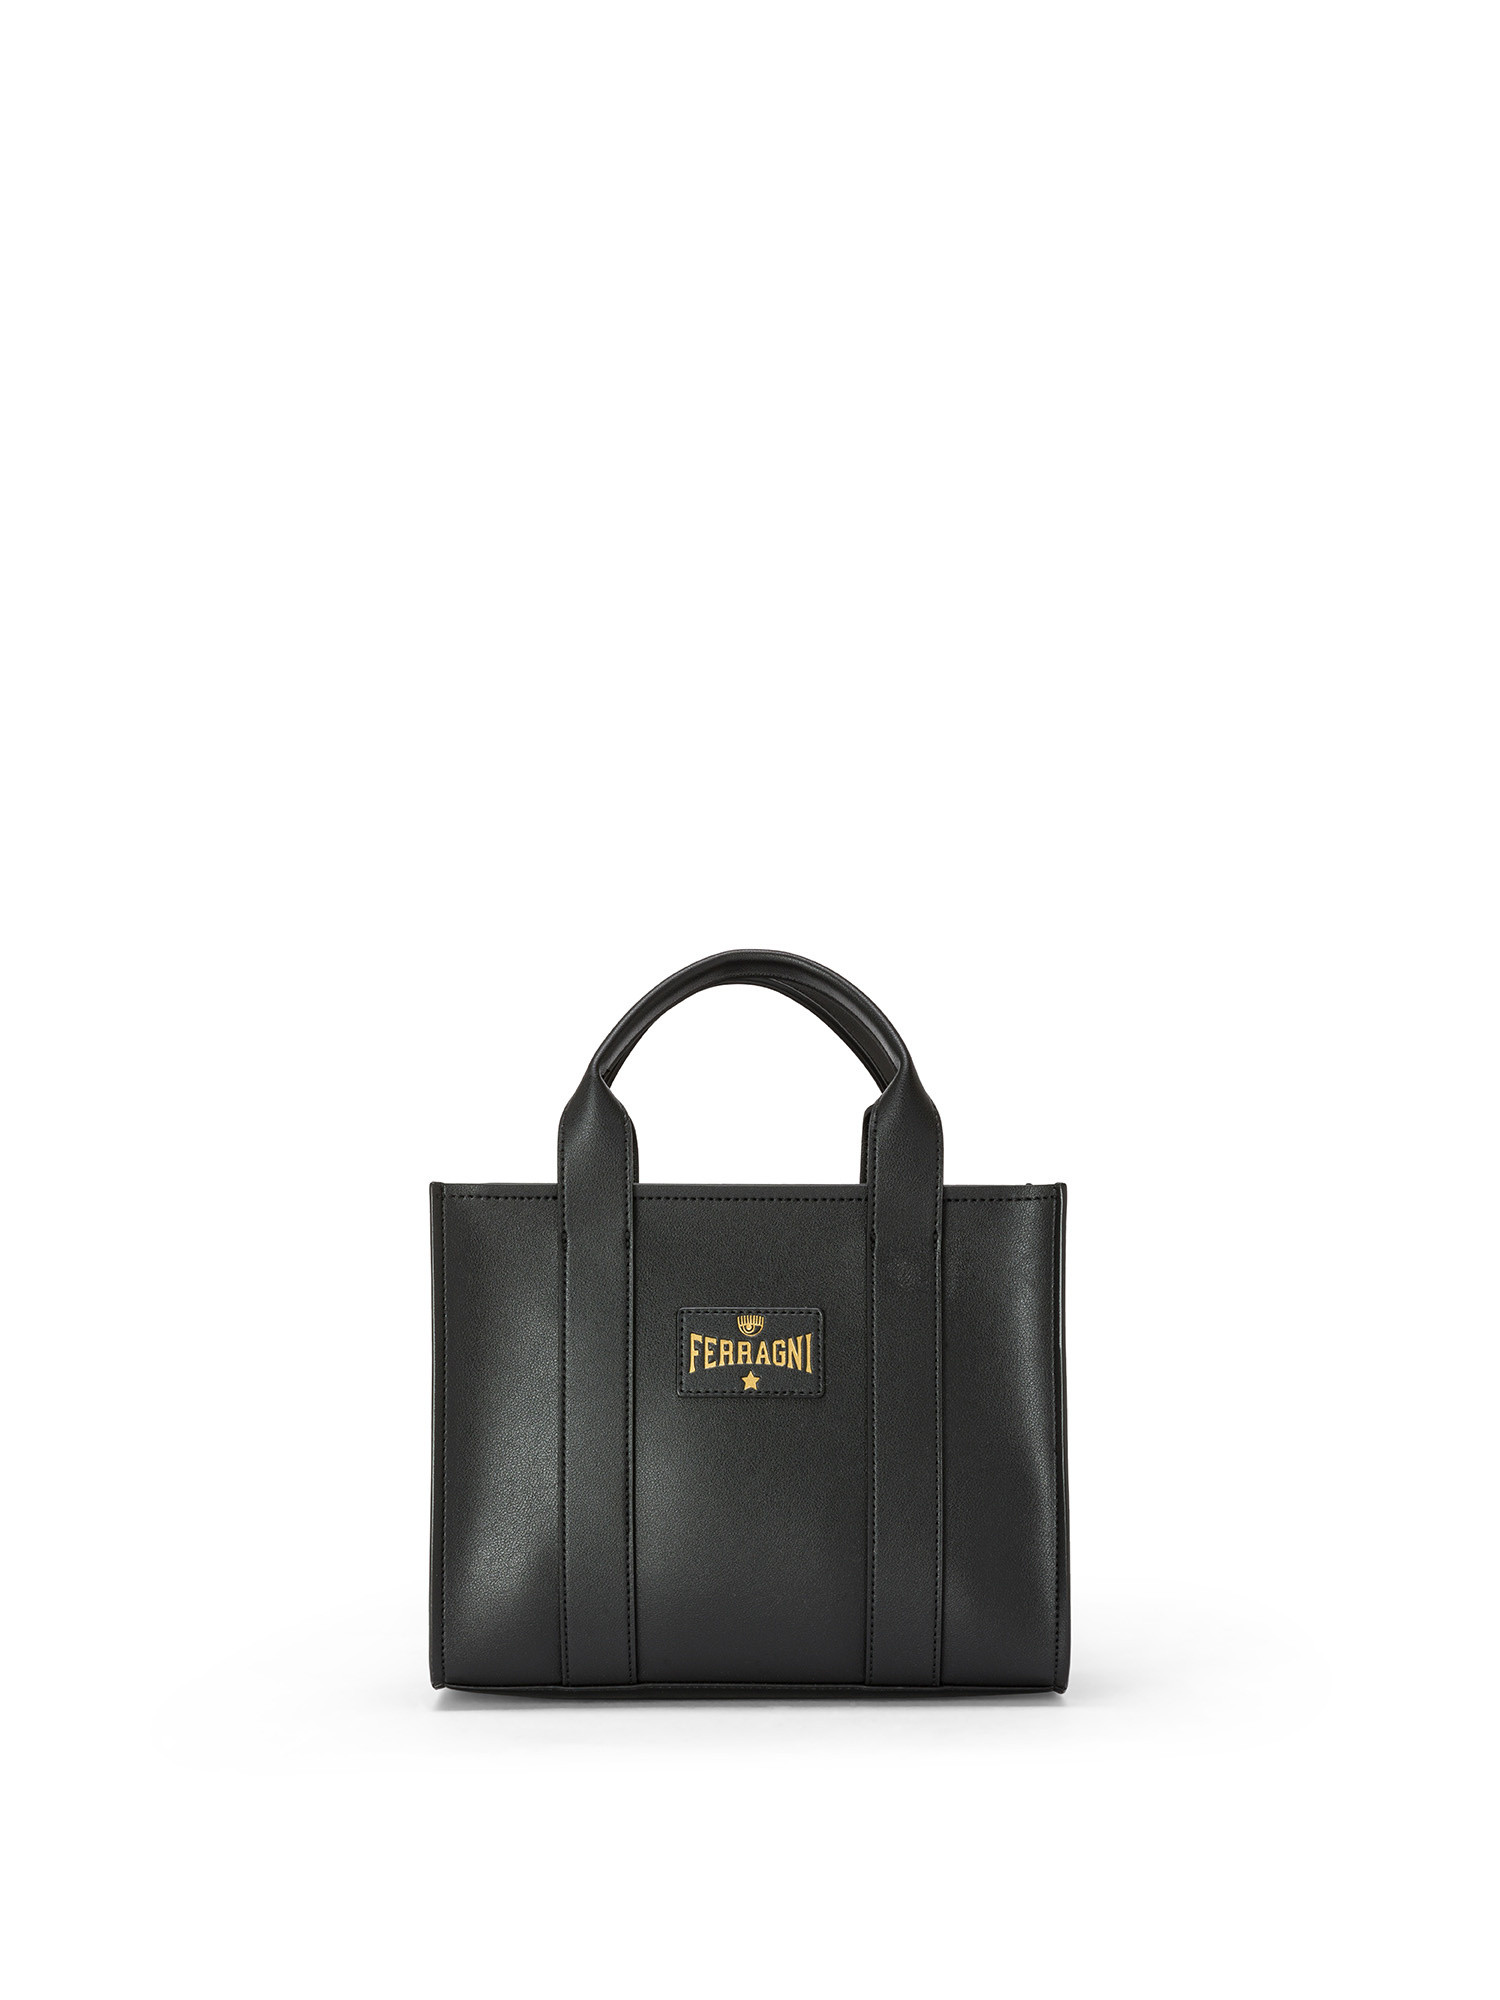 Chiara Ferragni - Range N stretch shopping bag, Black, large image number 0